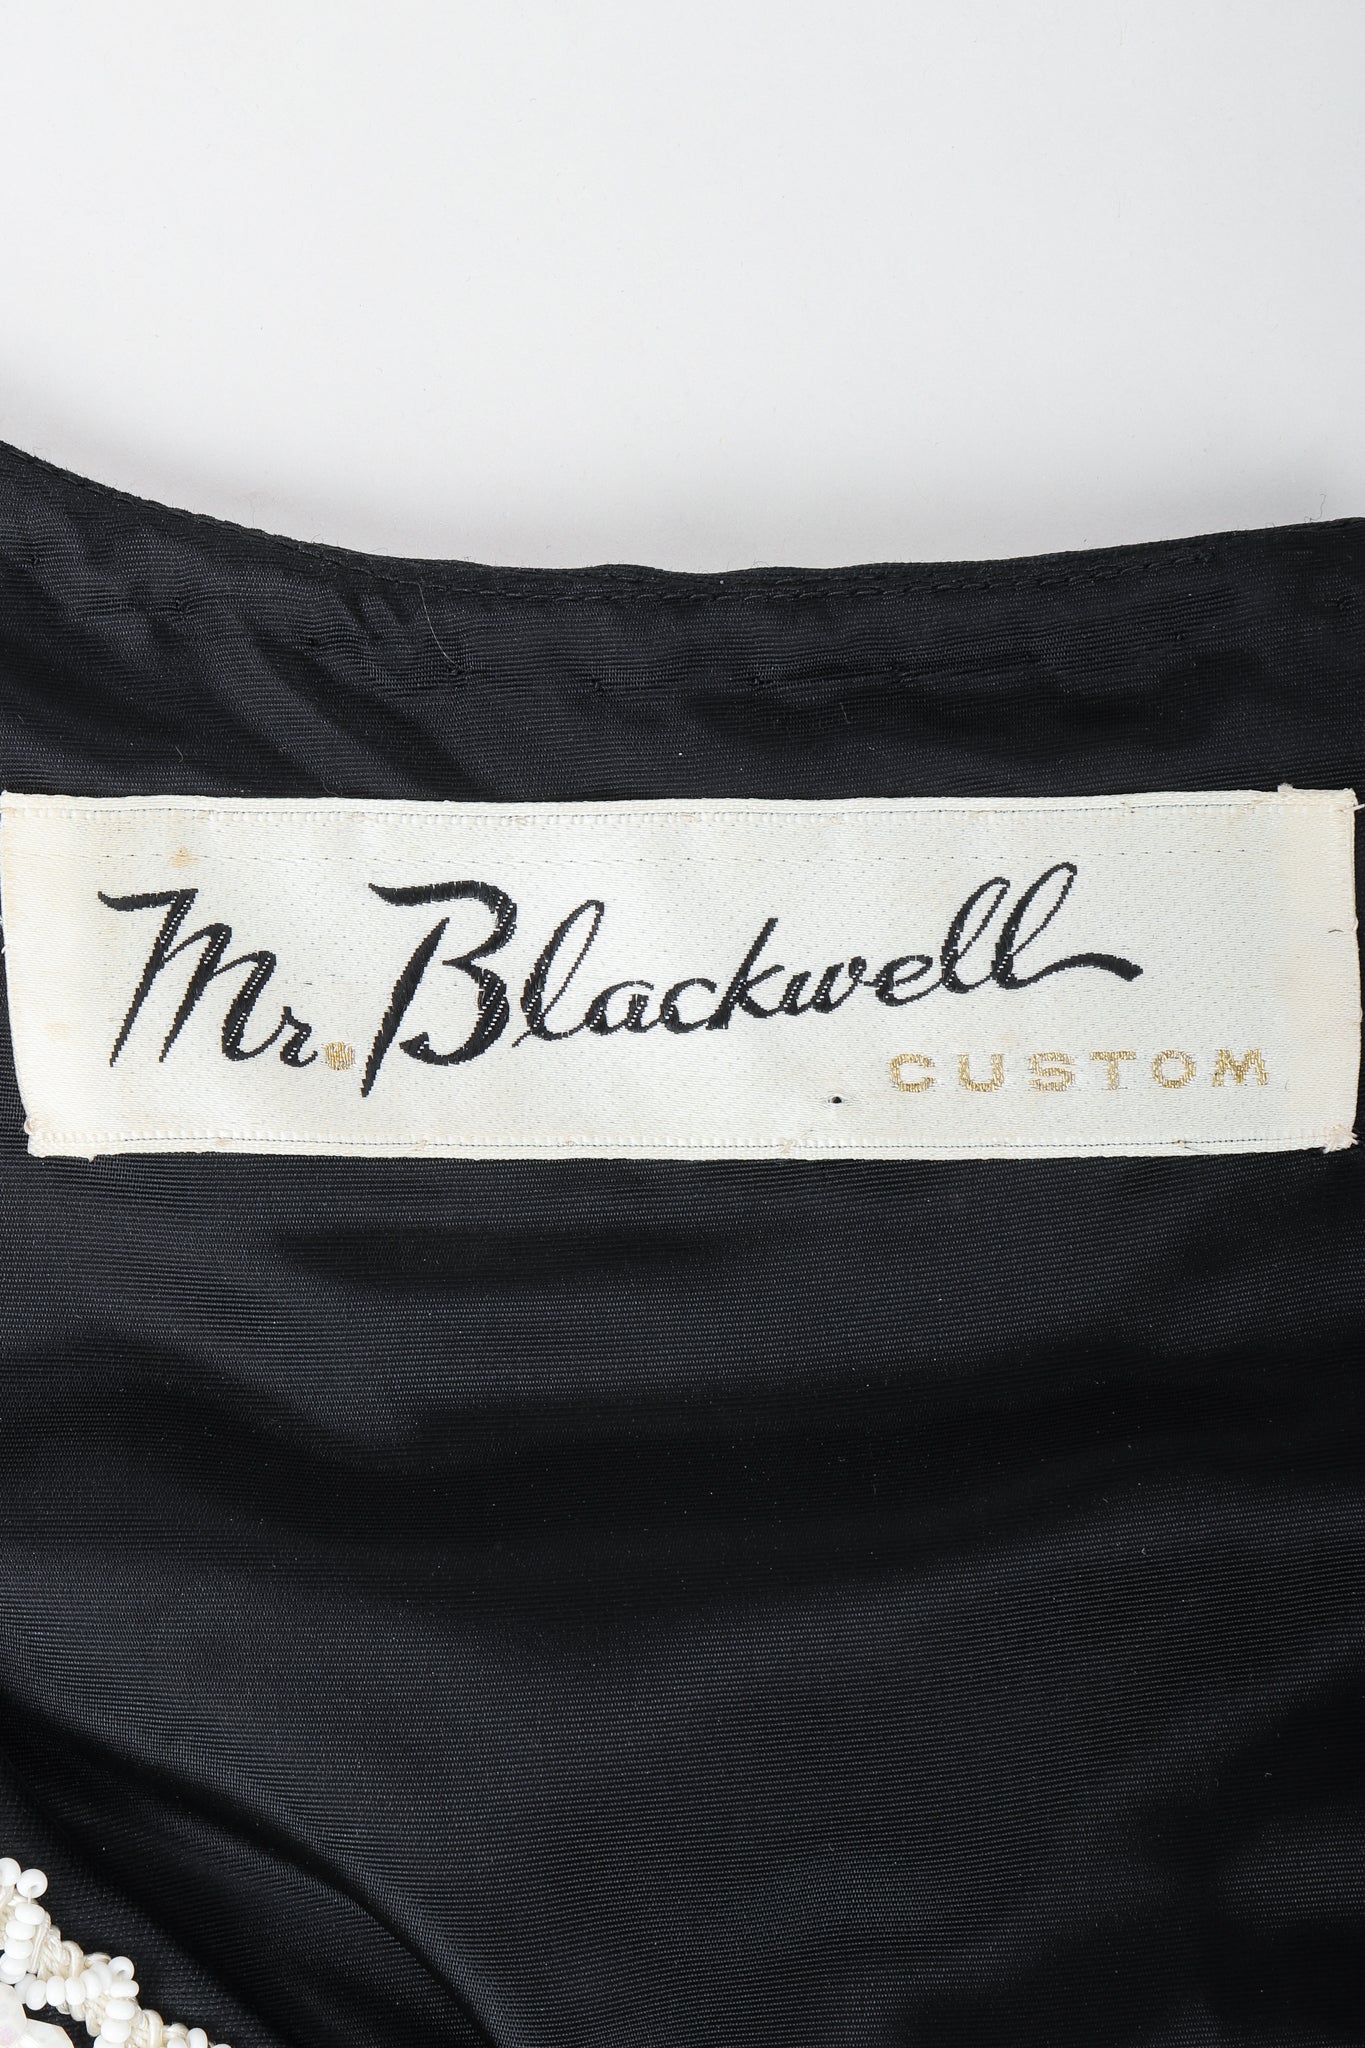 Vintage Mr. Blackwell Rhinestone & Bead Evening Gown Label at Recess LA